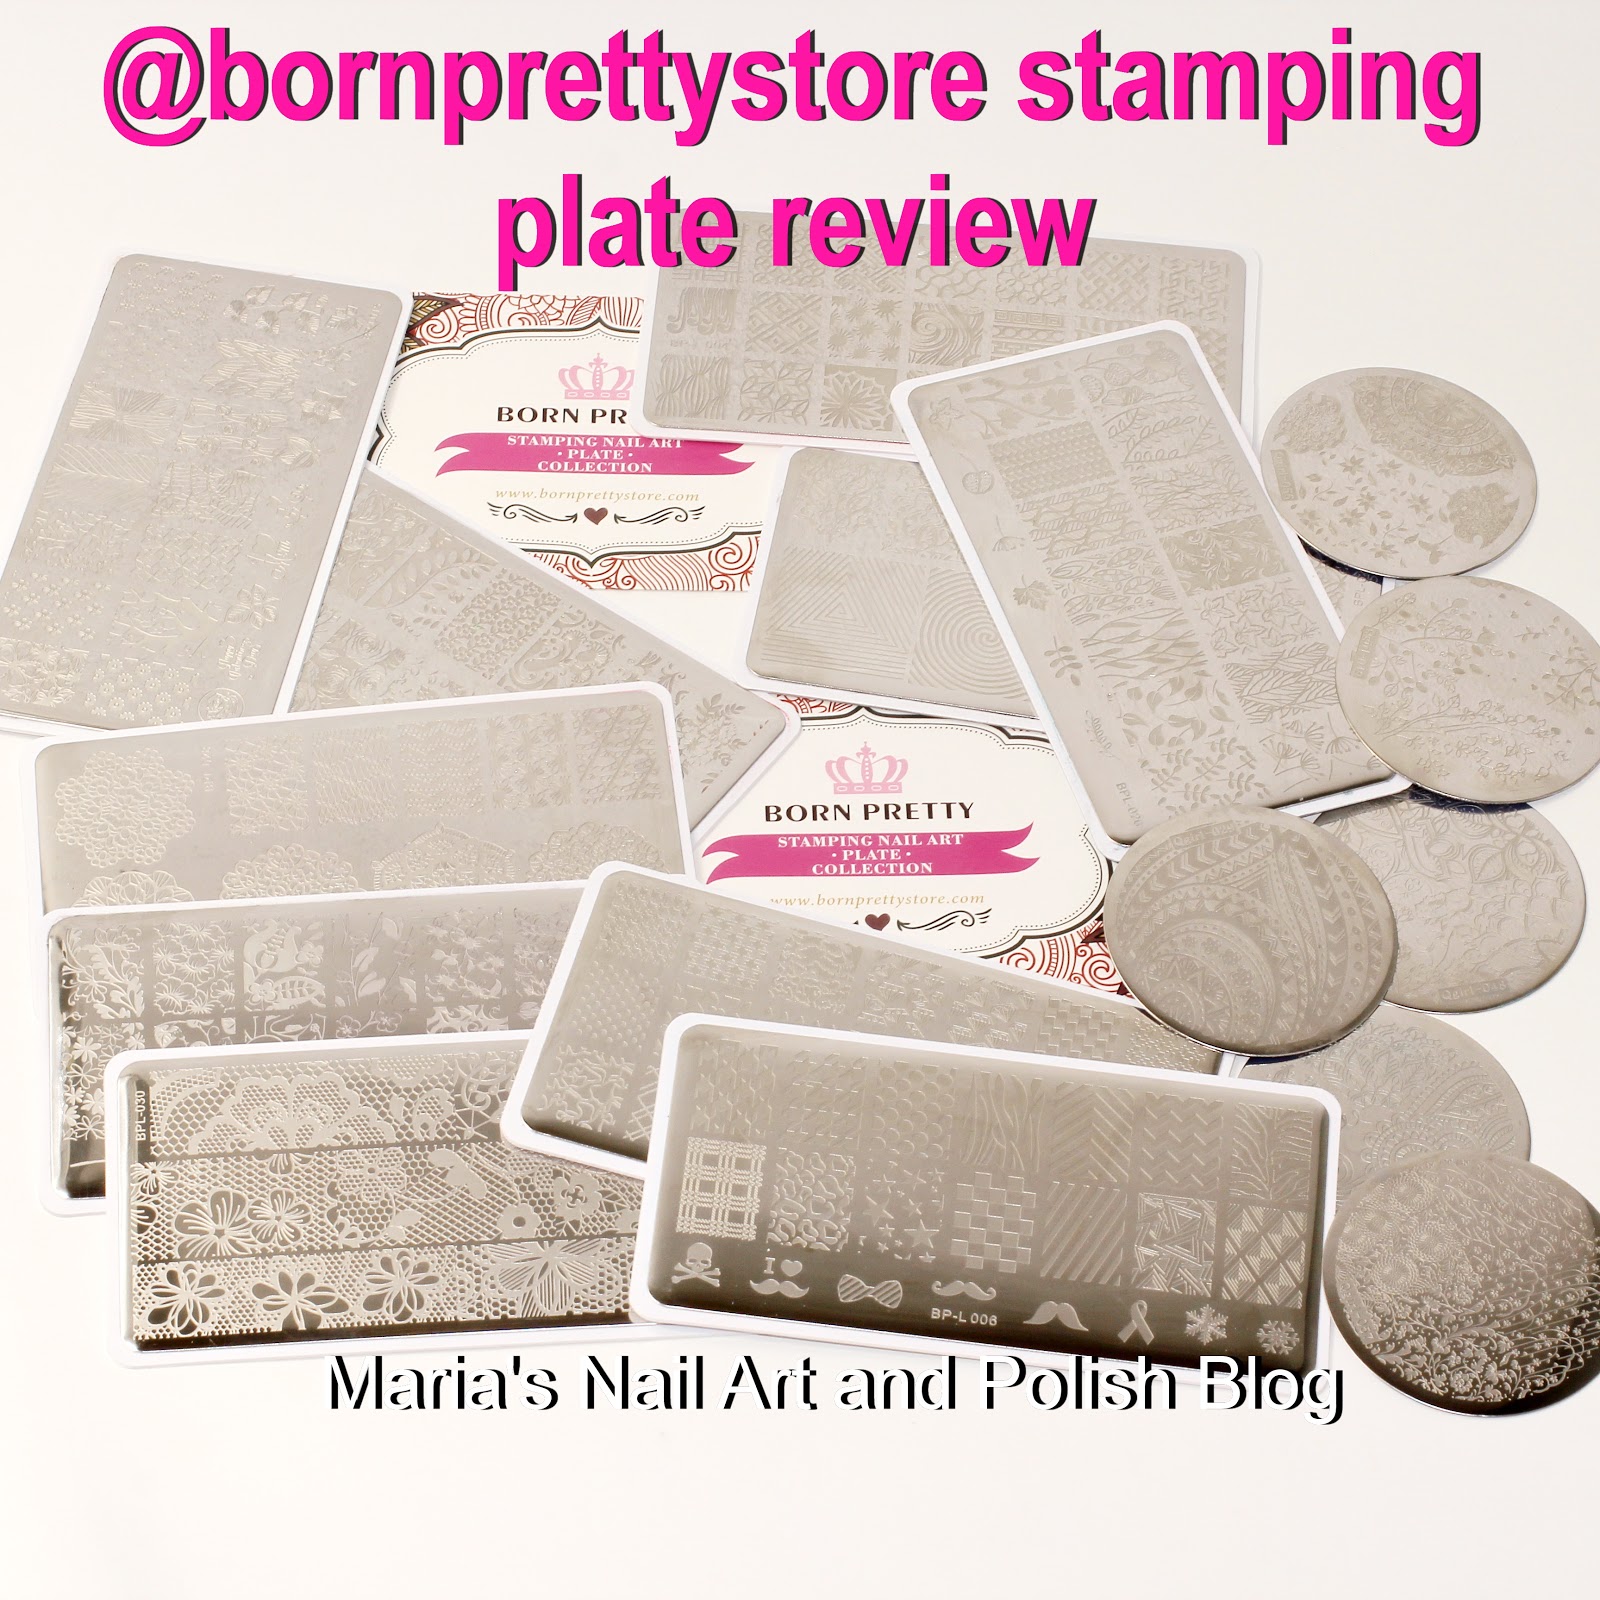 Marias Nail Art and Polish Blog: Born Pretty Store stamping plate review